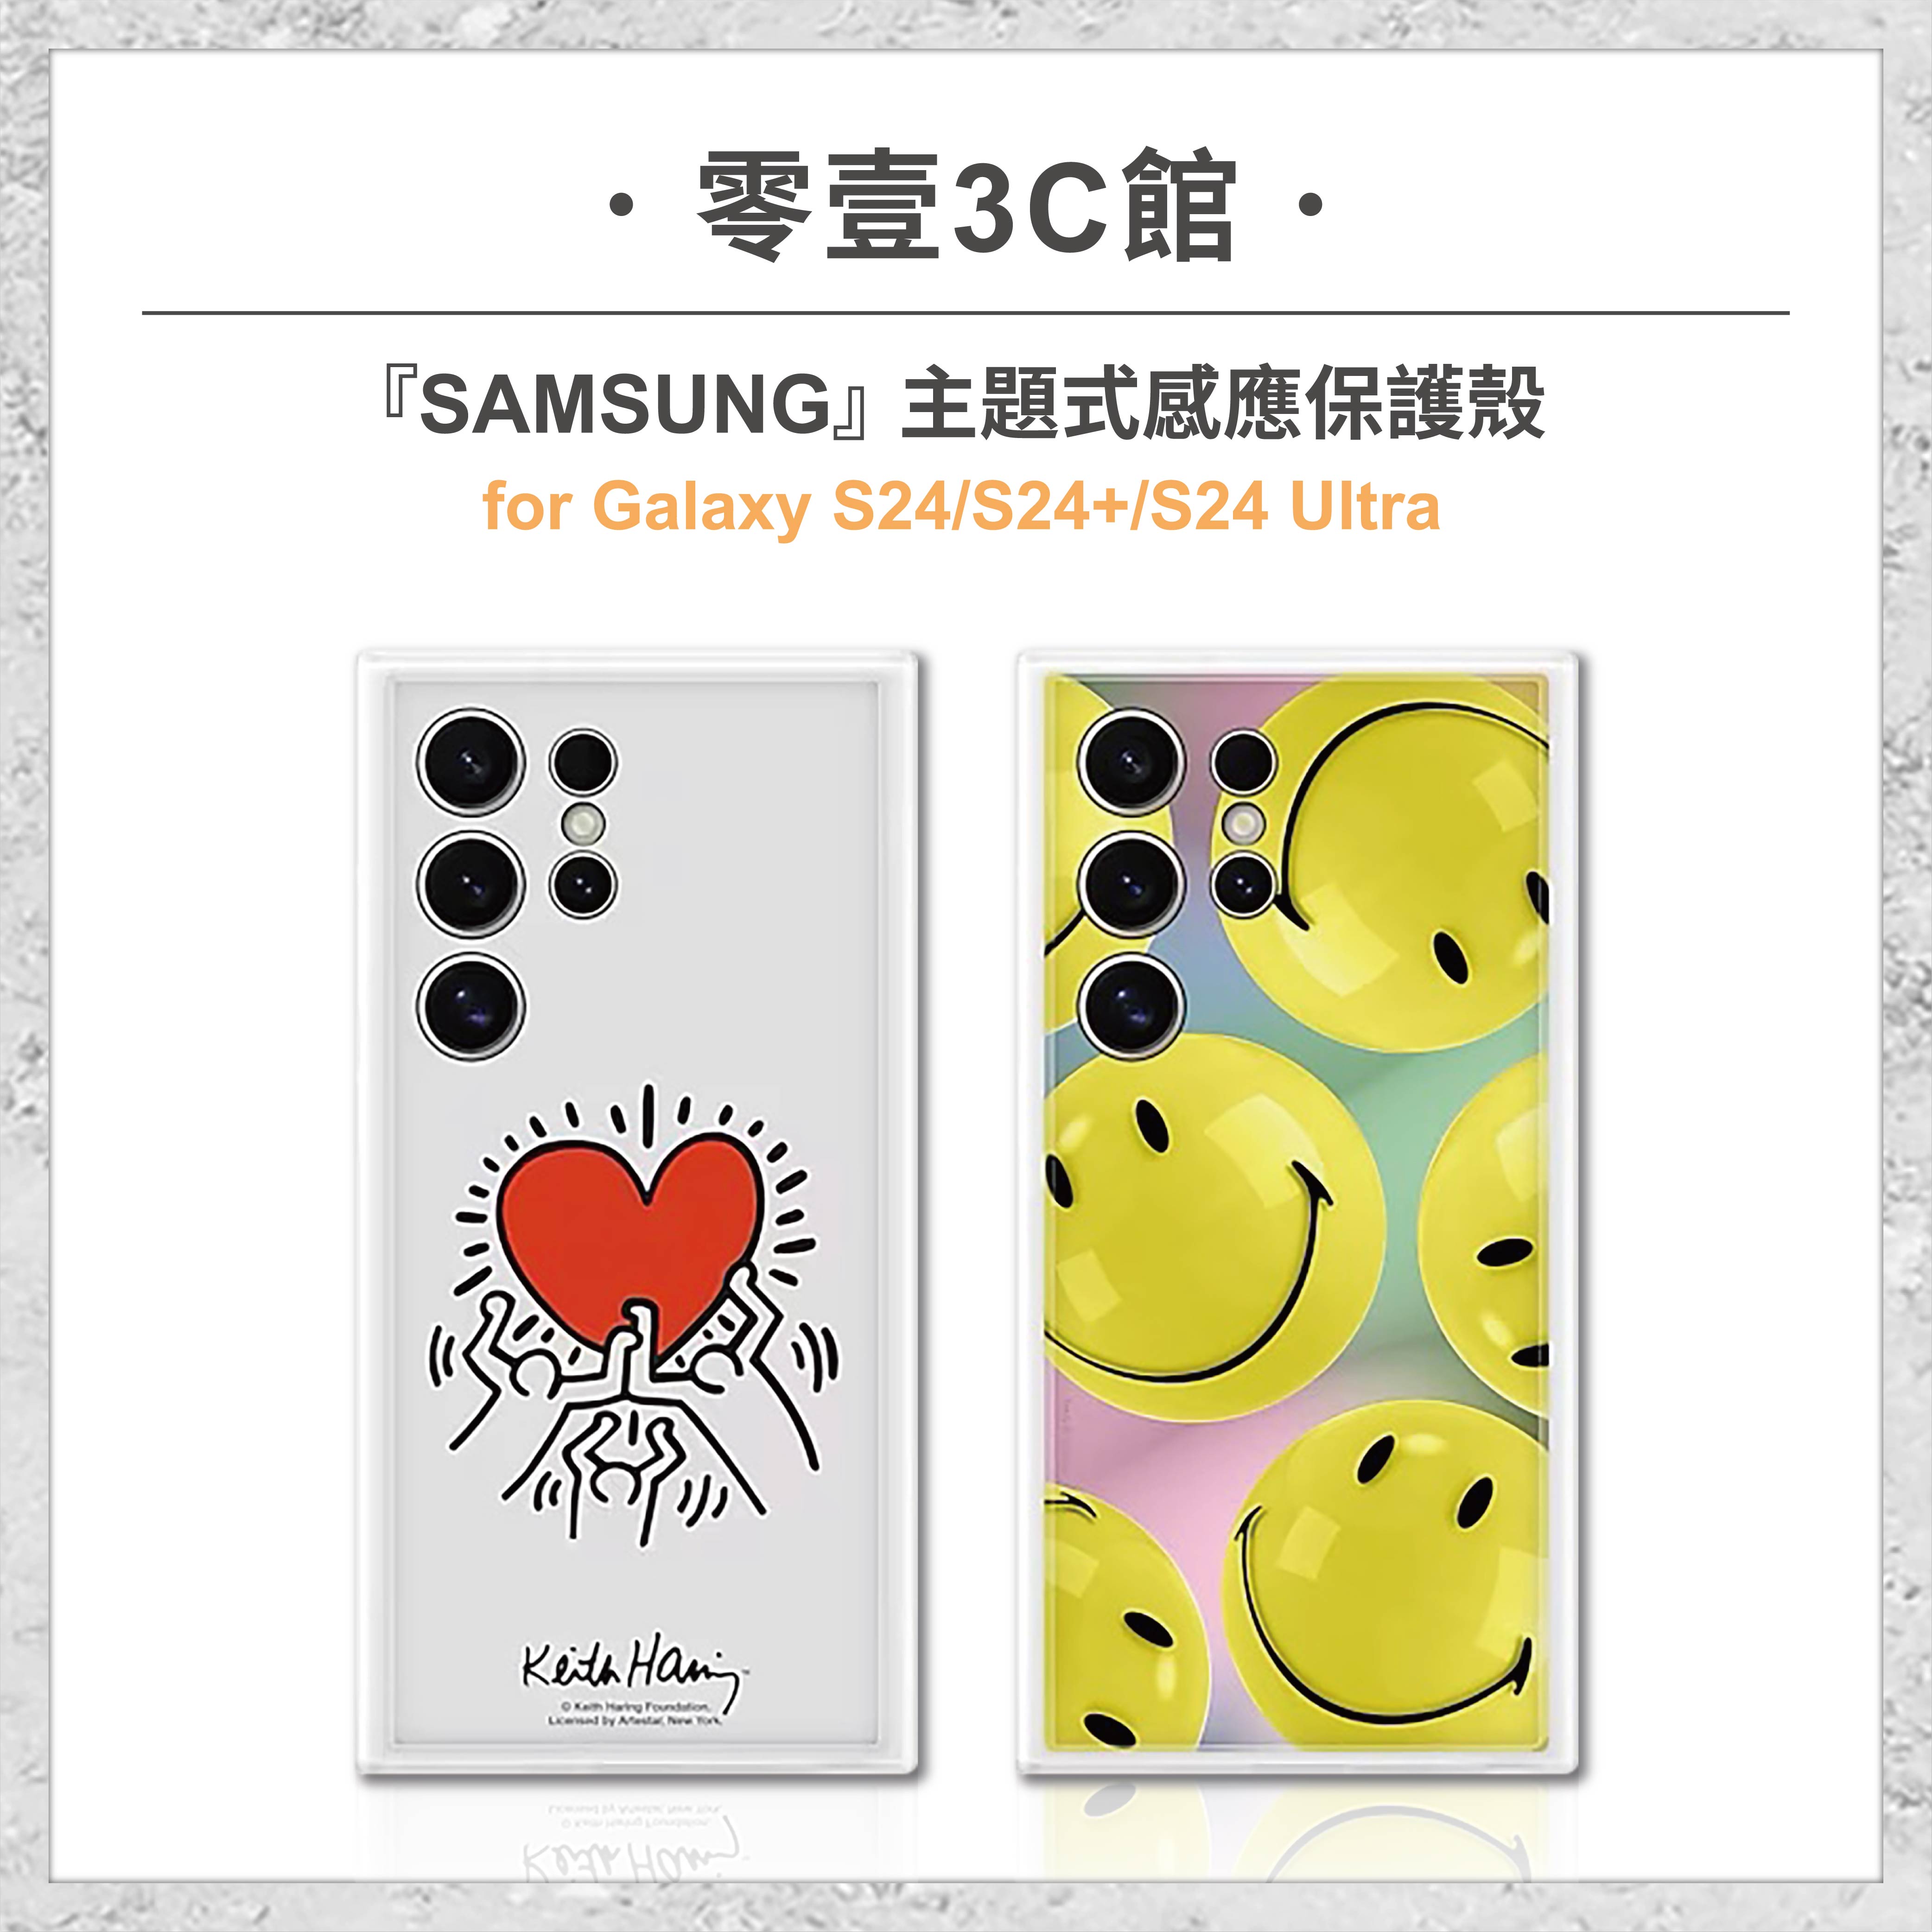 『SAMSUNG』Galaxy S24/S24+/S24 Ultra 主題式感應保護殼 手機殼